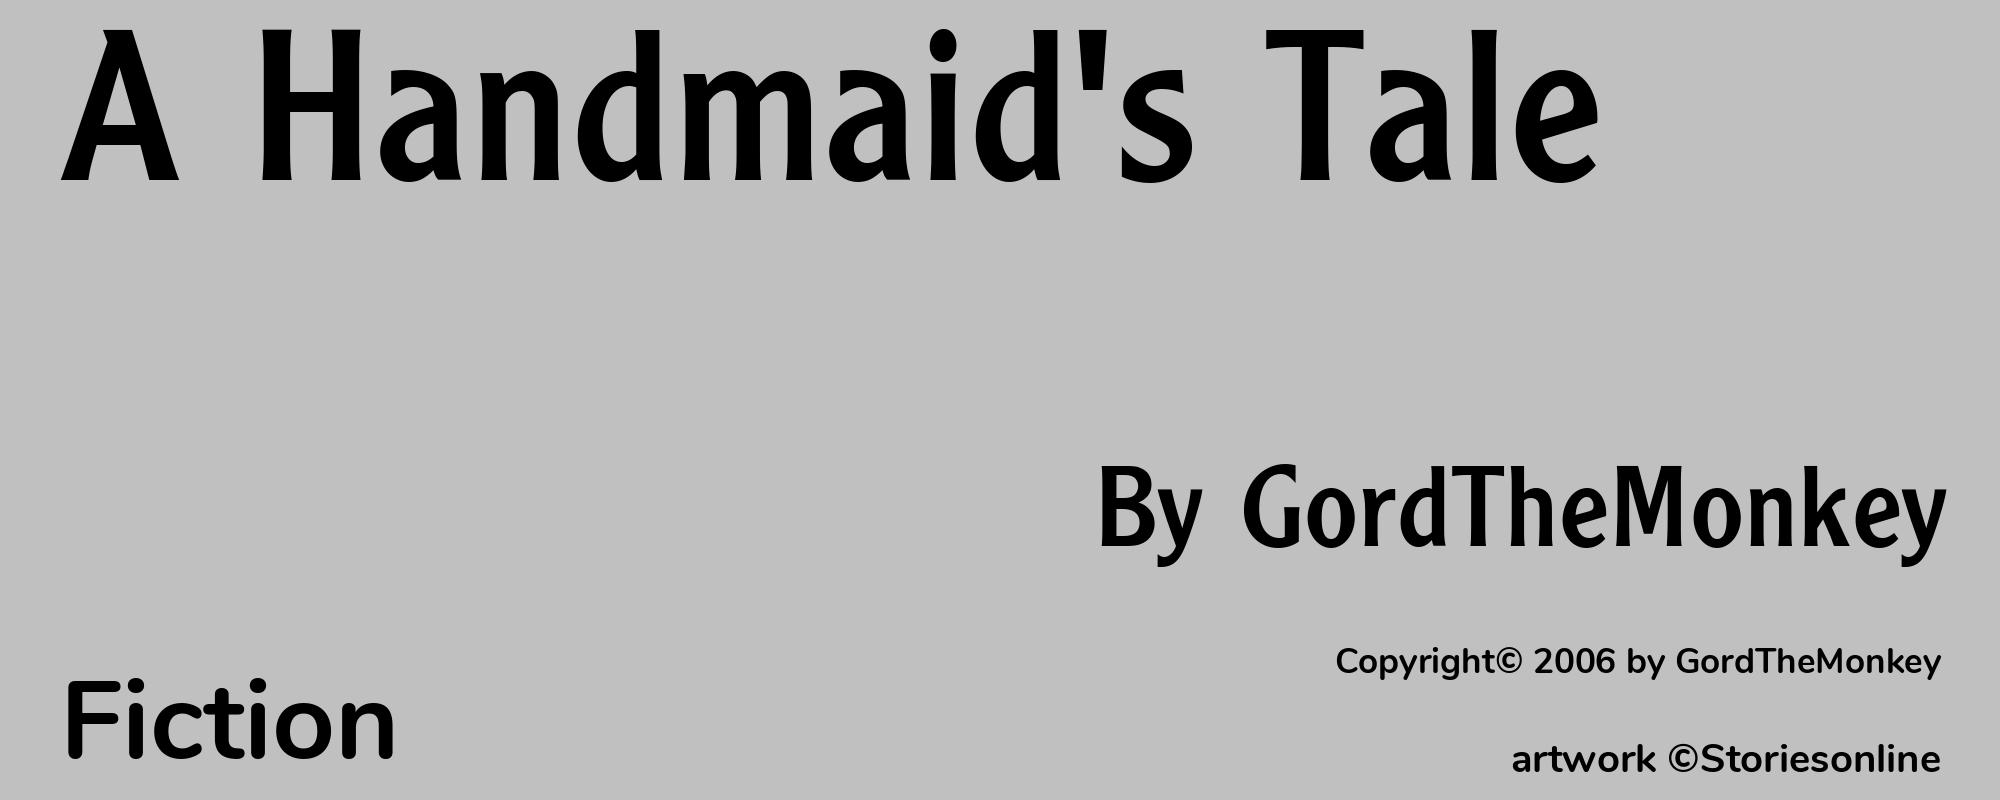 A Handmaid's Tale - Cover